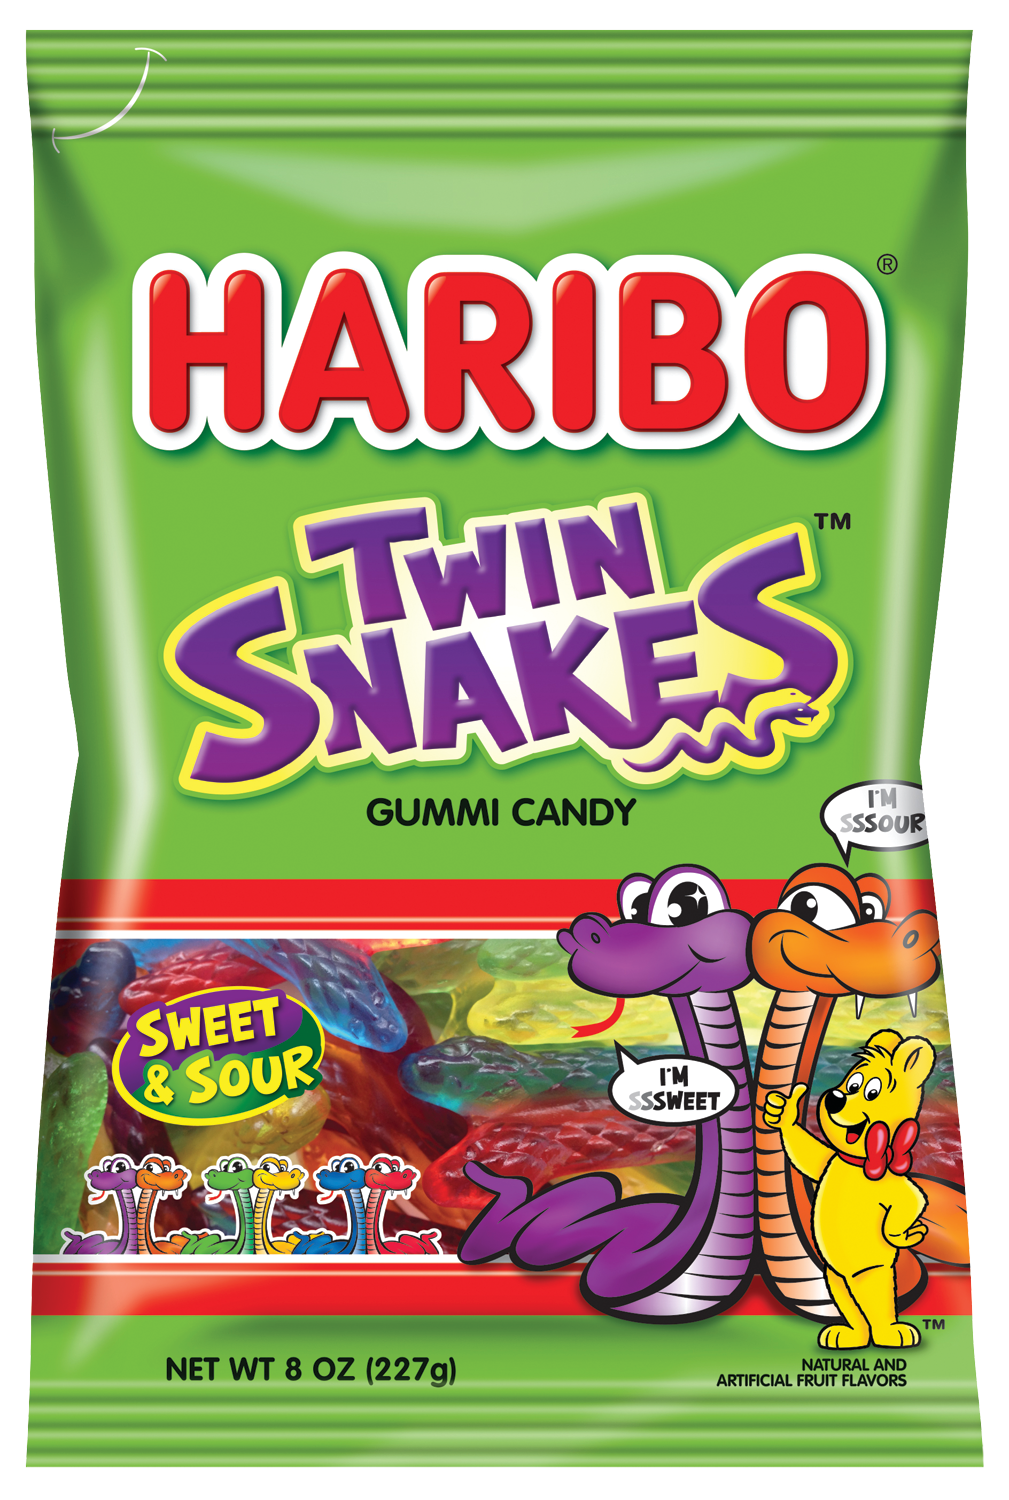 Haribo Twin Snakes Gummi Candy, 8 Oz , CVS